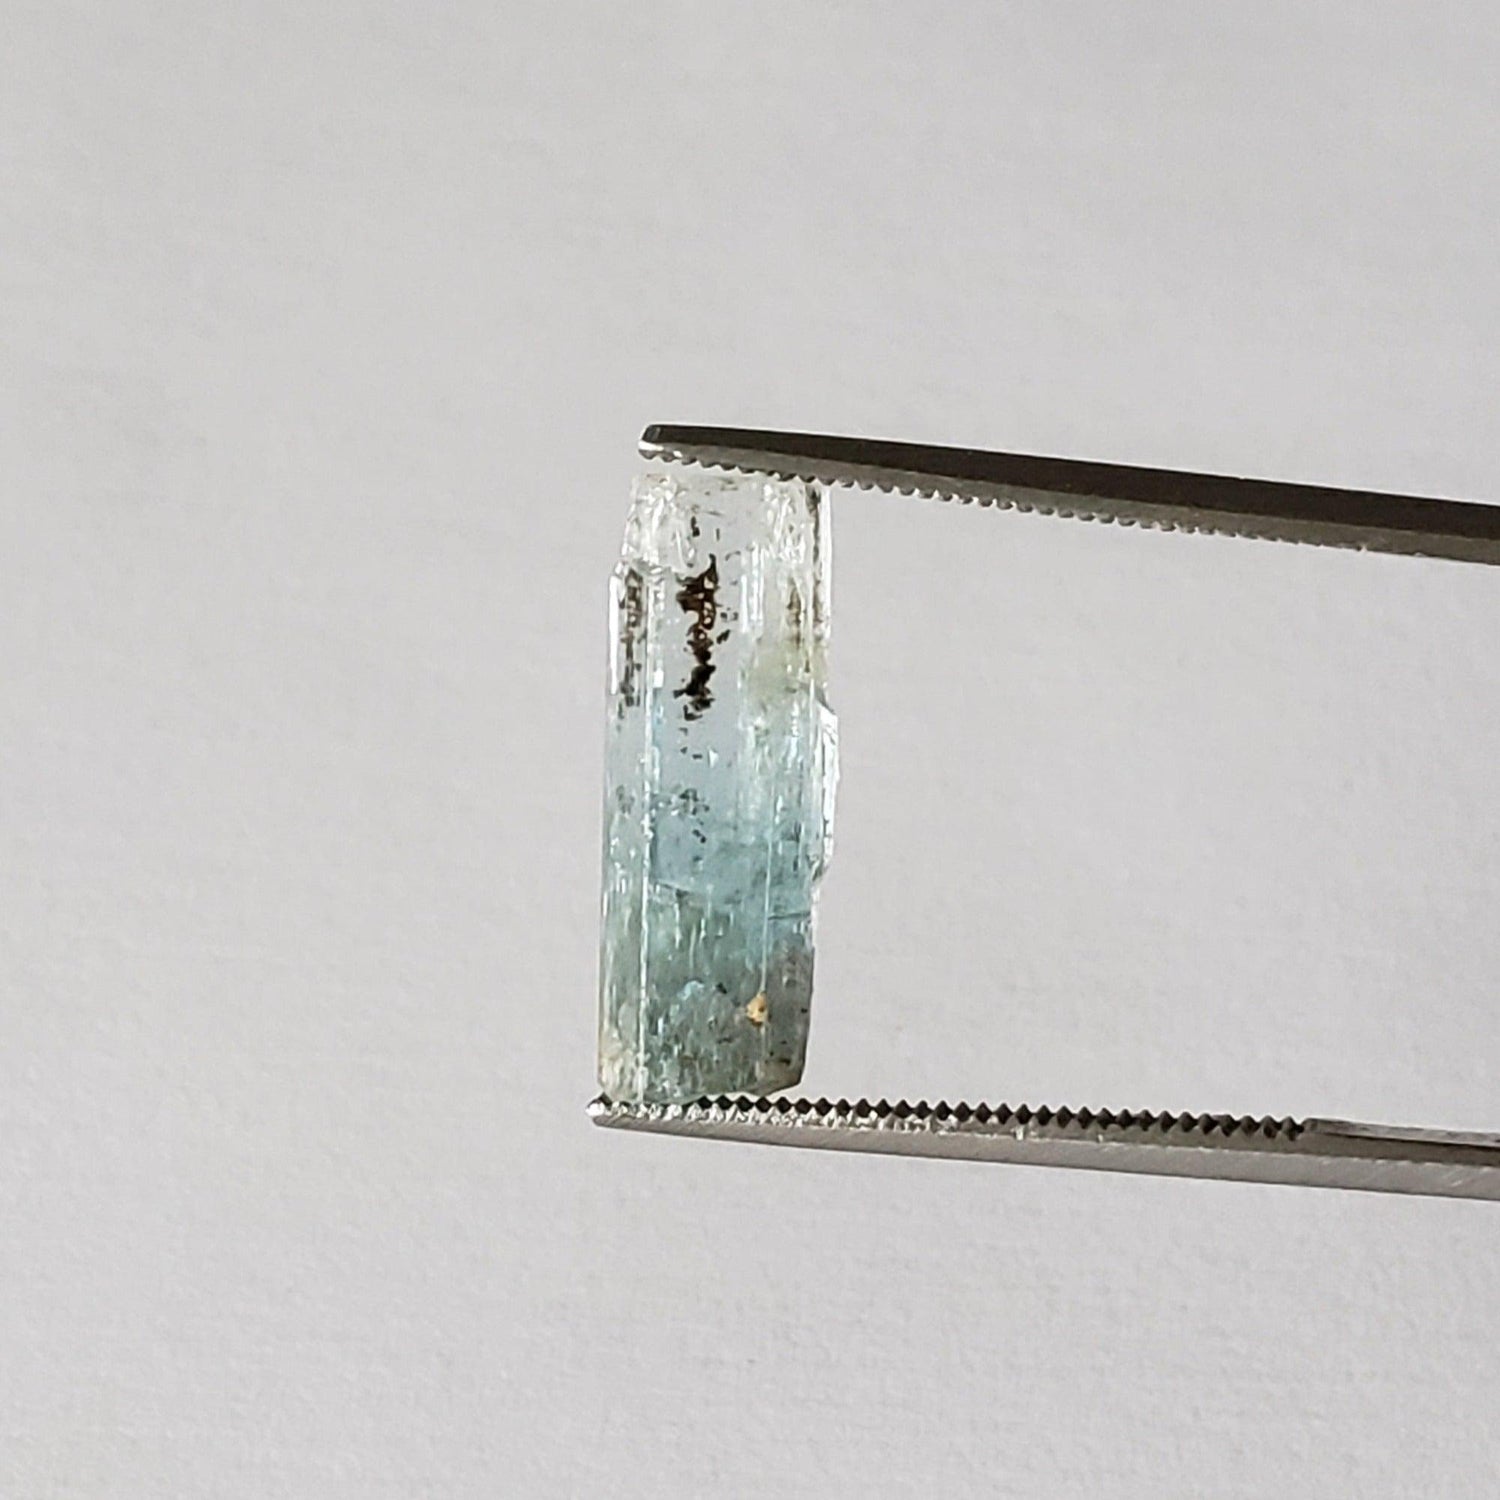 Beryl var. Aquamarine Crystal Mineral, Famous Erongo, Usakos Namibia